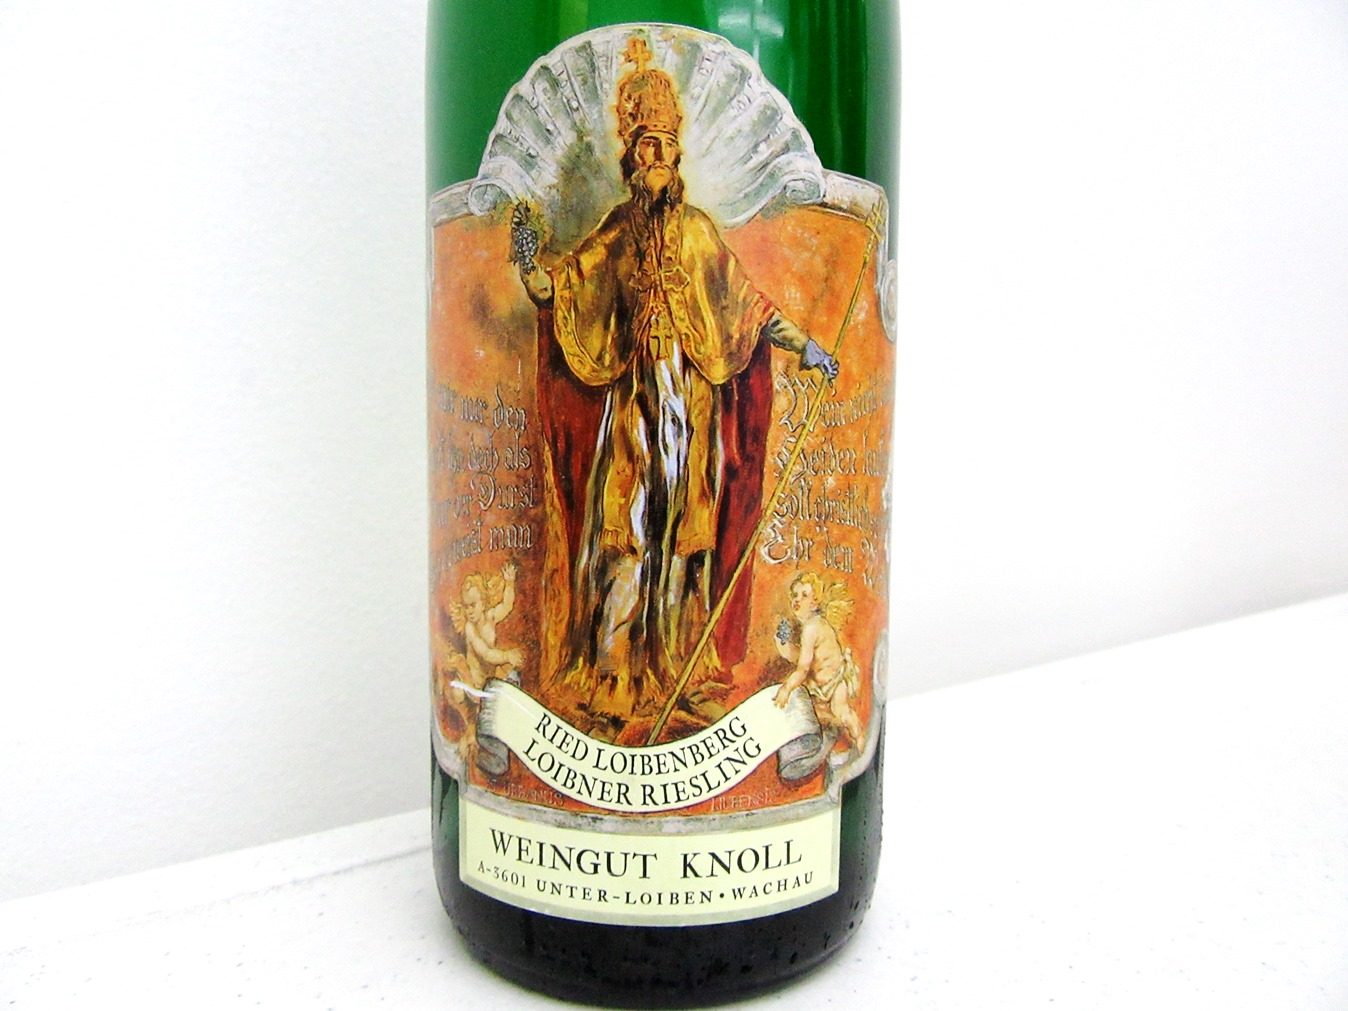 Weingut Knoll Riesling, Ried Loibenberg Smaragd Riesling 2014, Wachau, Austria, Wine Casual